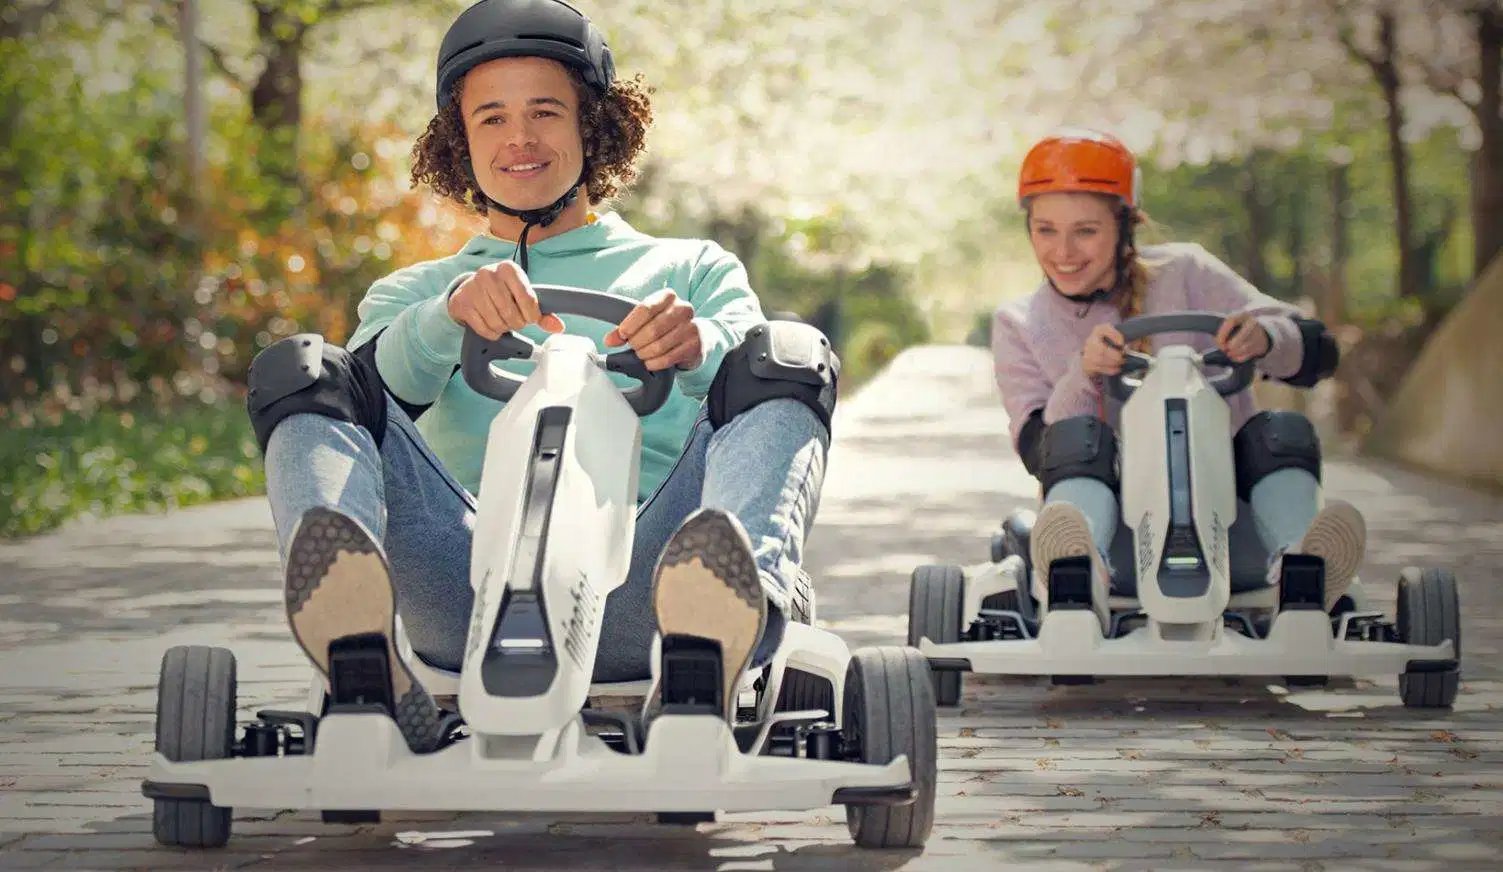 Ninebot Go Kart Kit Electric Gokart Bundle, Outdoor Race Pedal Go Karting Car for Kids and Adults